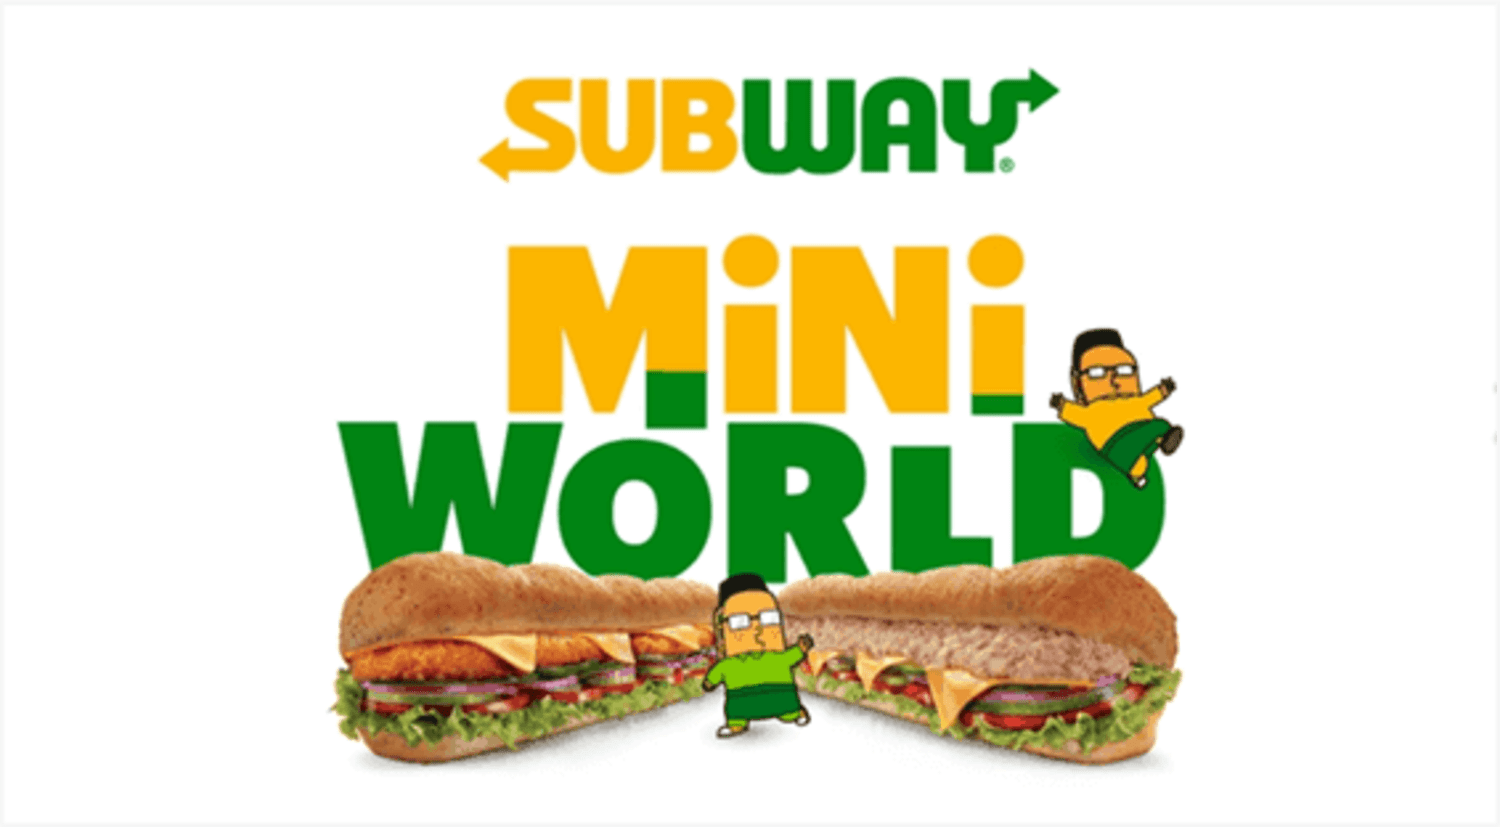 Subway Mini World video